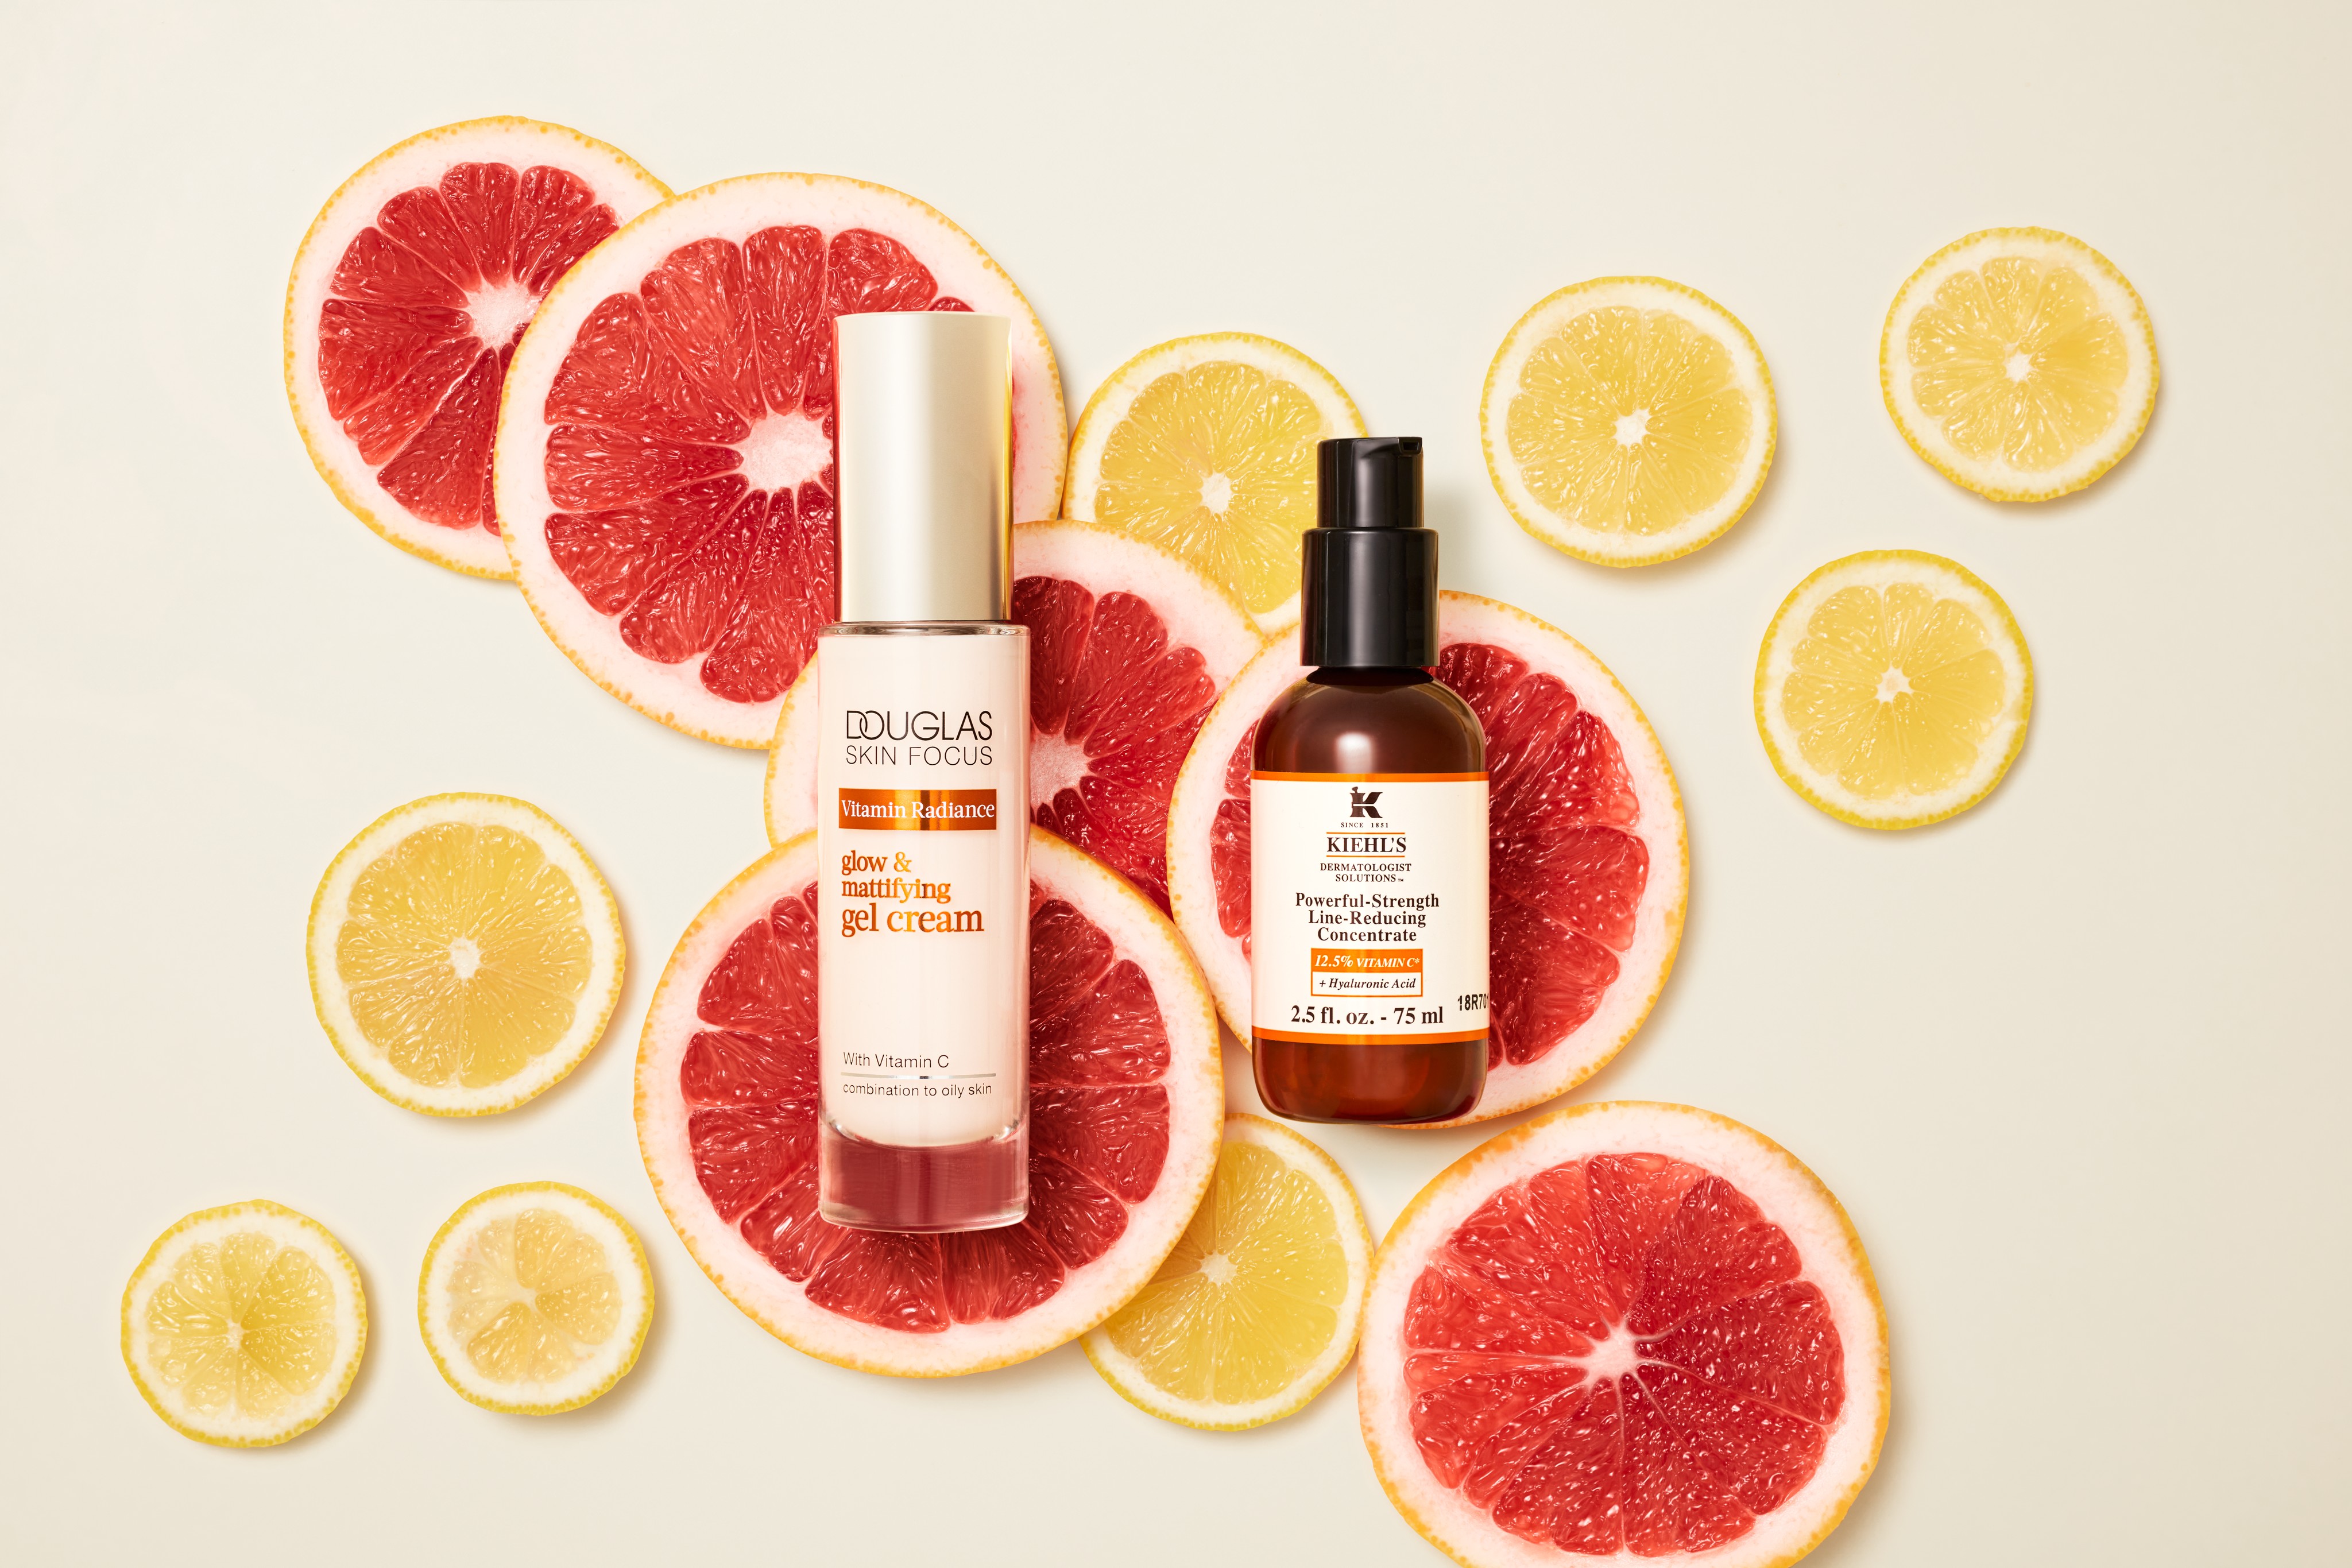 Skincare-product-beige-background-grapefruit-slices-douglas-collection-kiehls-vitamin-c-unlimited-Web-Rendition